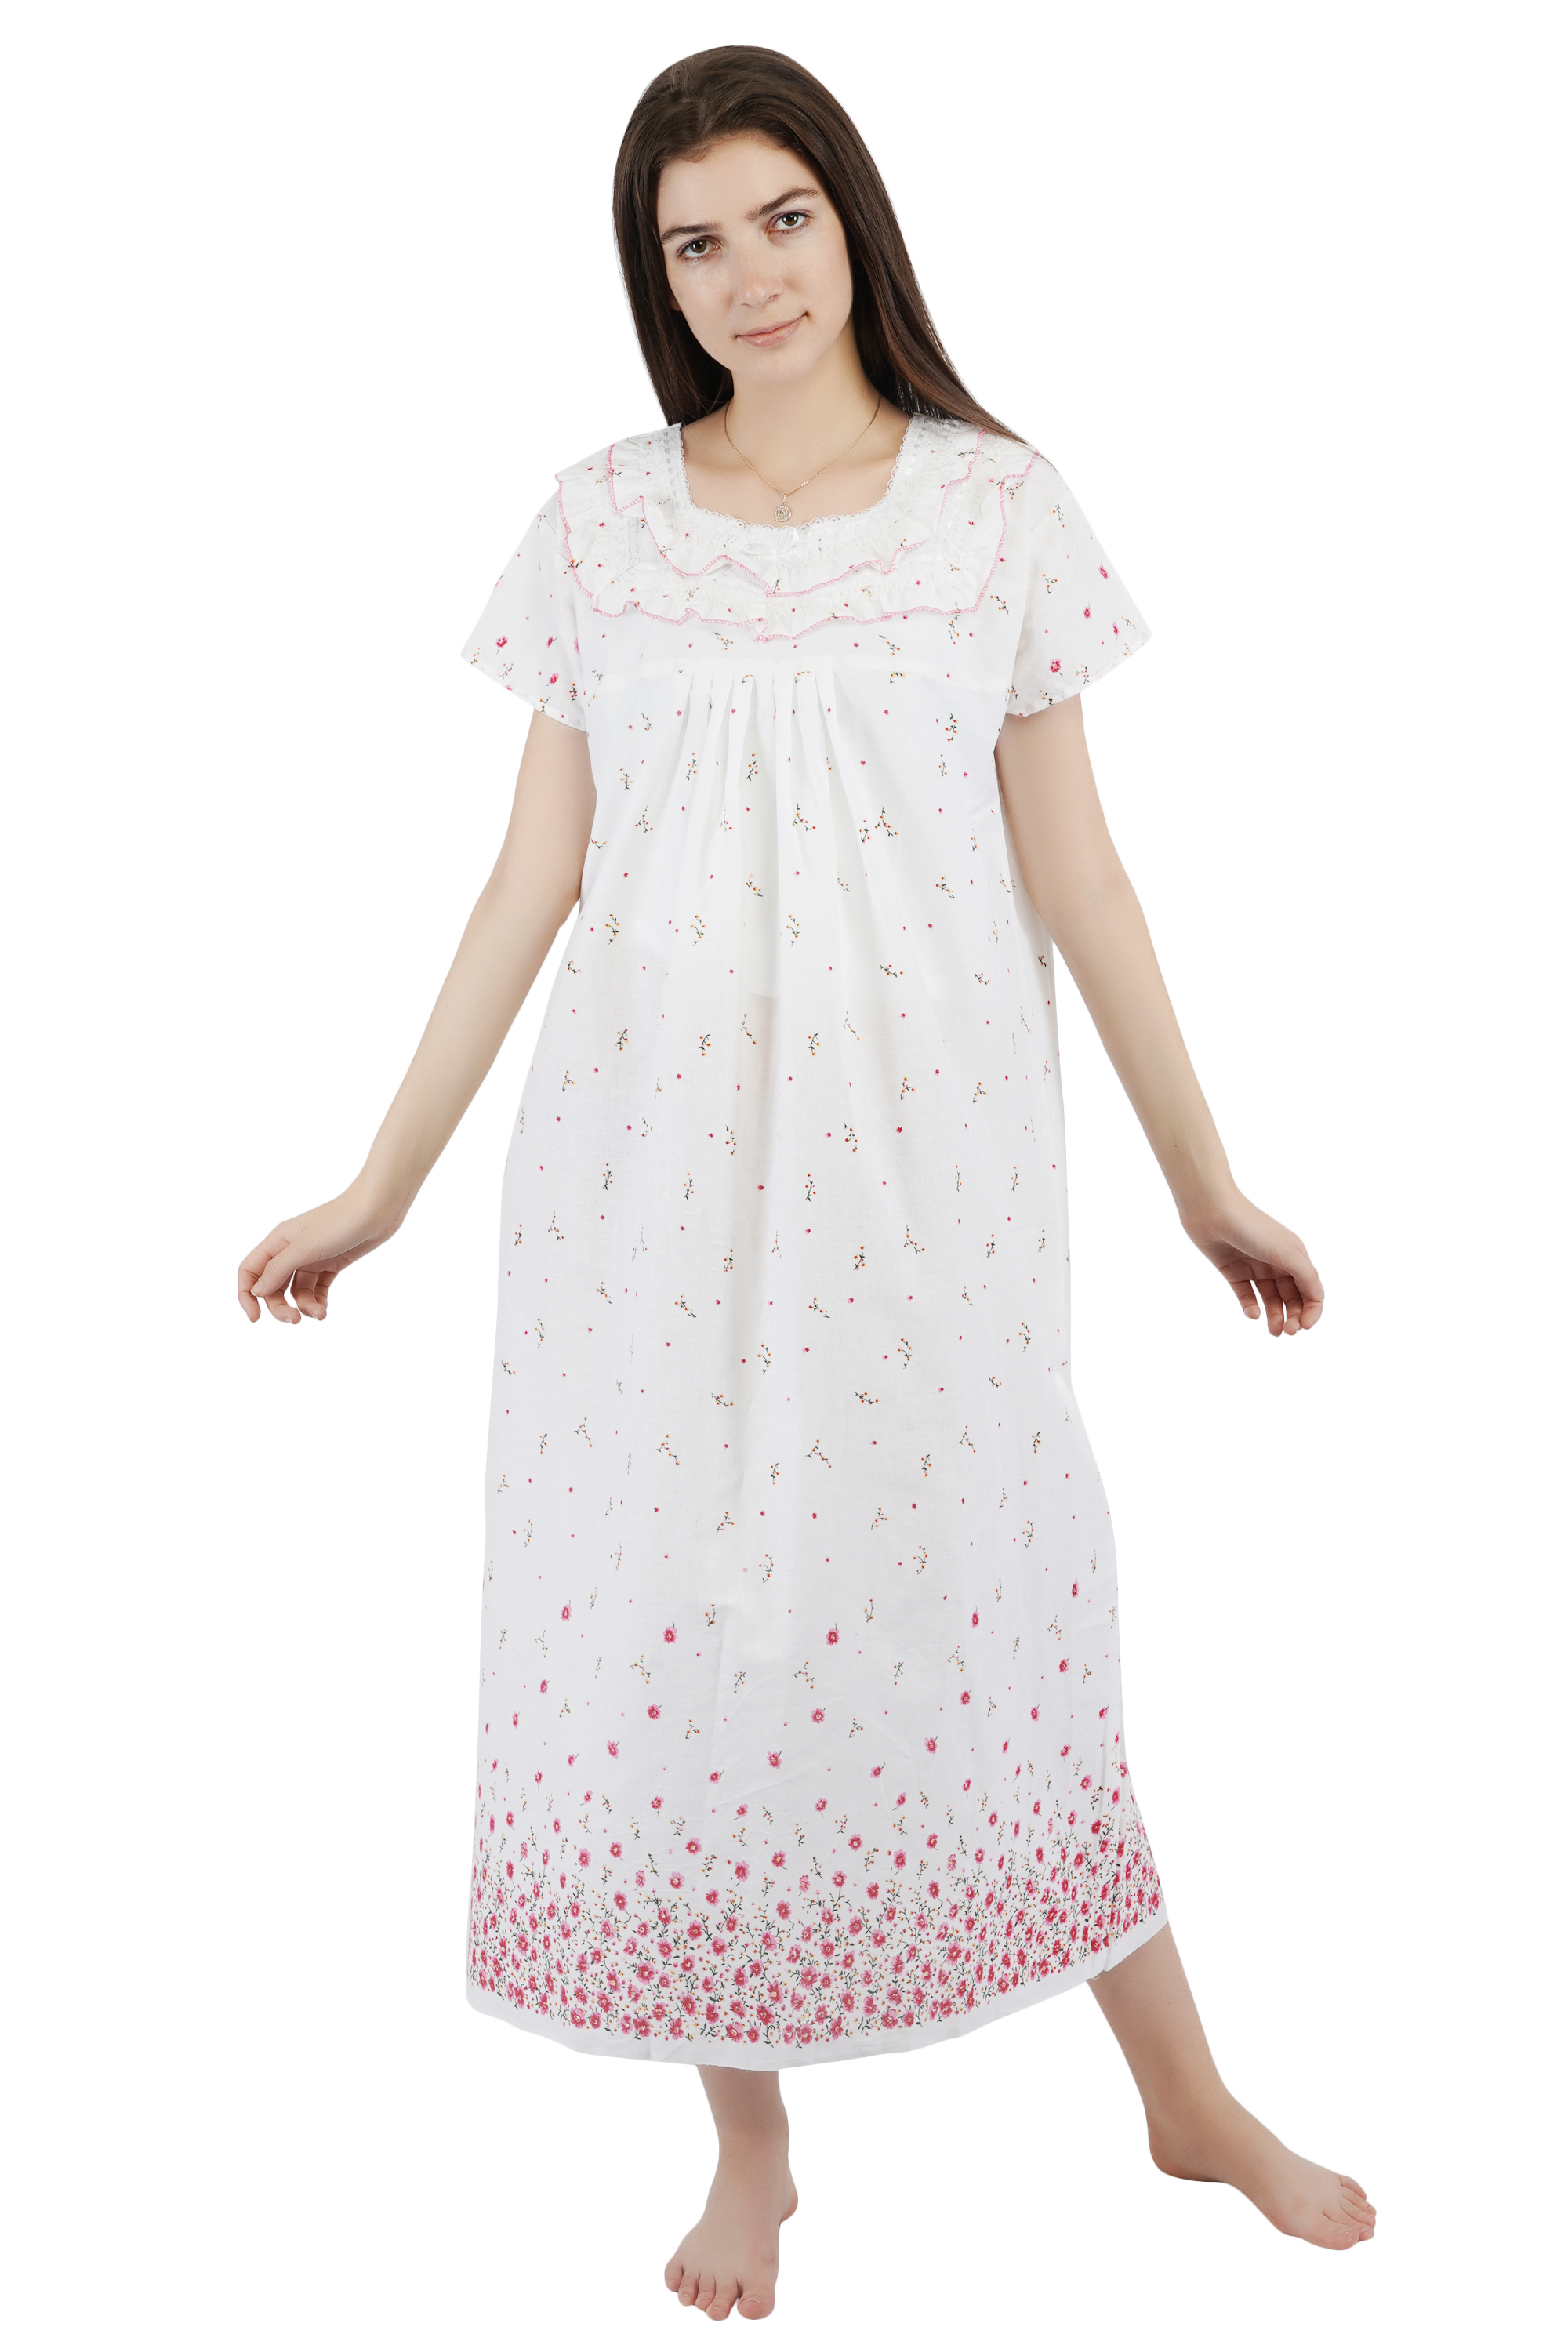 Buy Kaddy Women's Cotton Printed Nighty Night Dress nighty for Girls ...